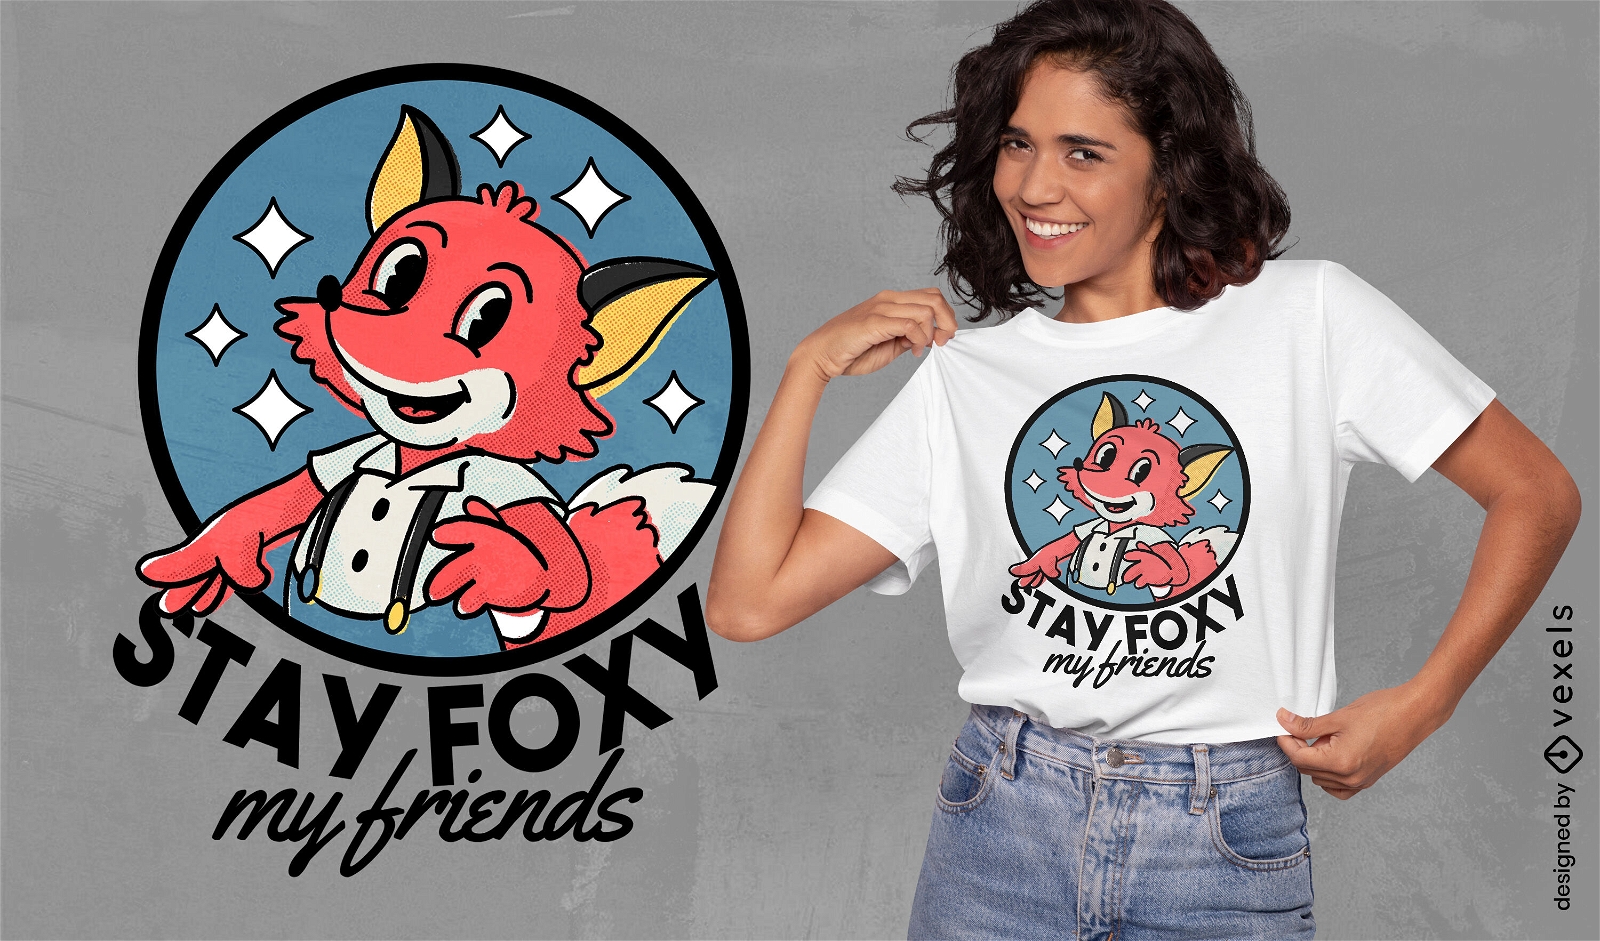 Stay foxy friends t-shirt design